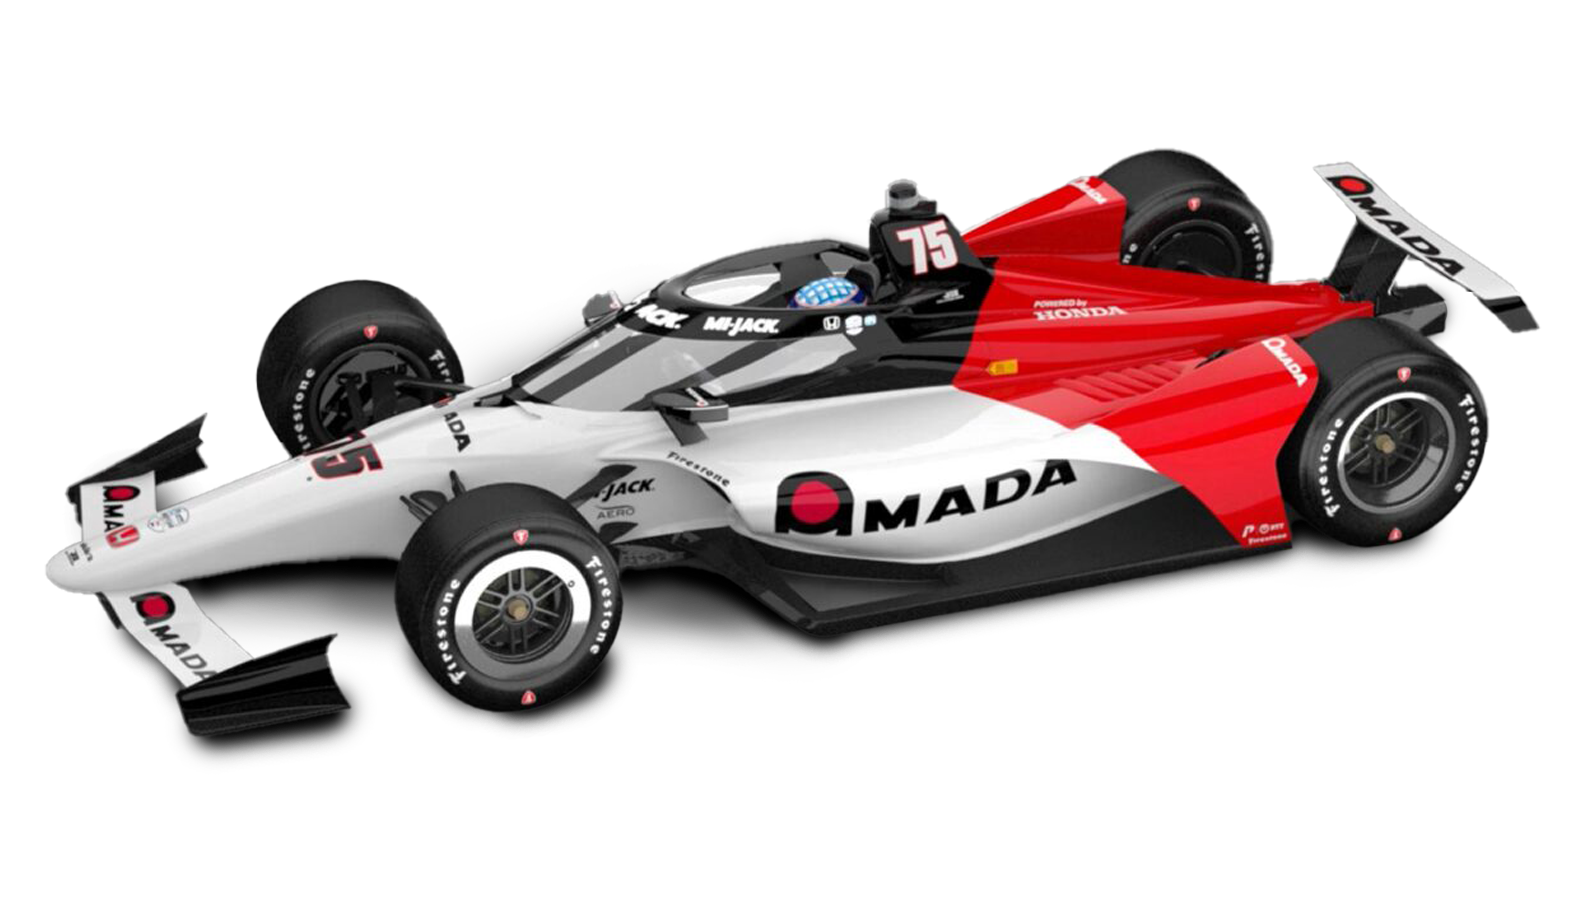 AMADA Indy 500 car Featured